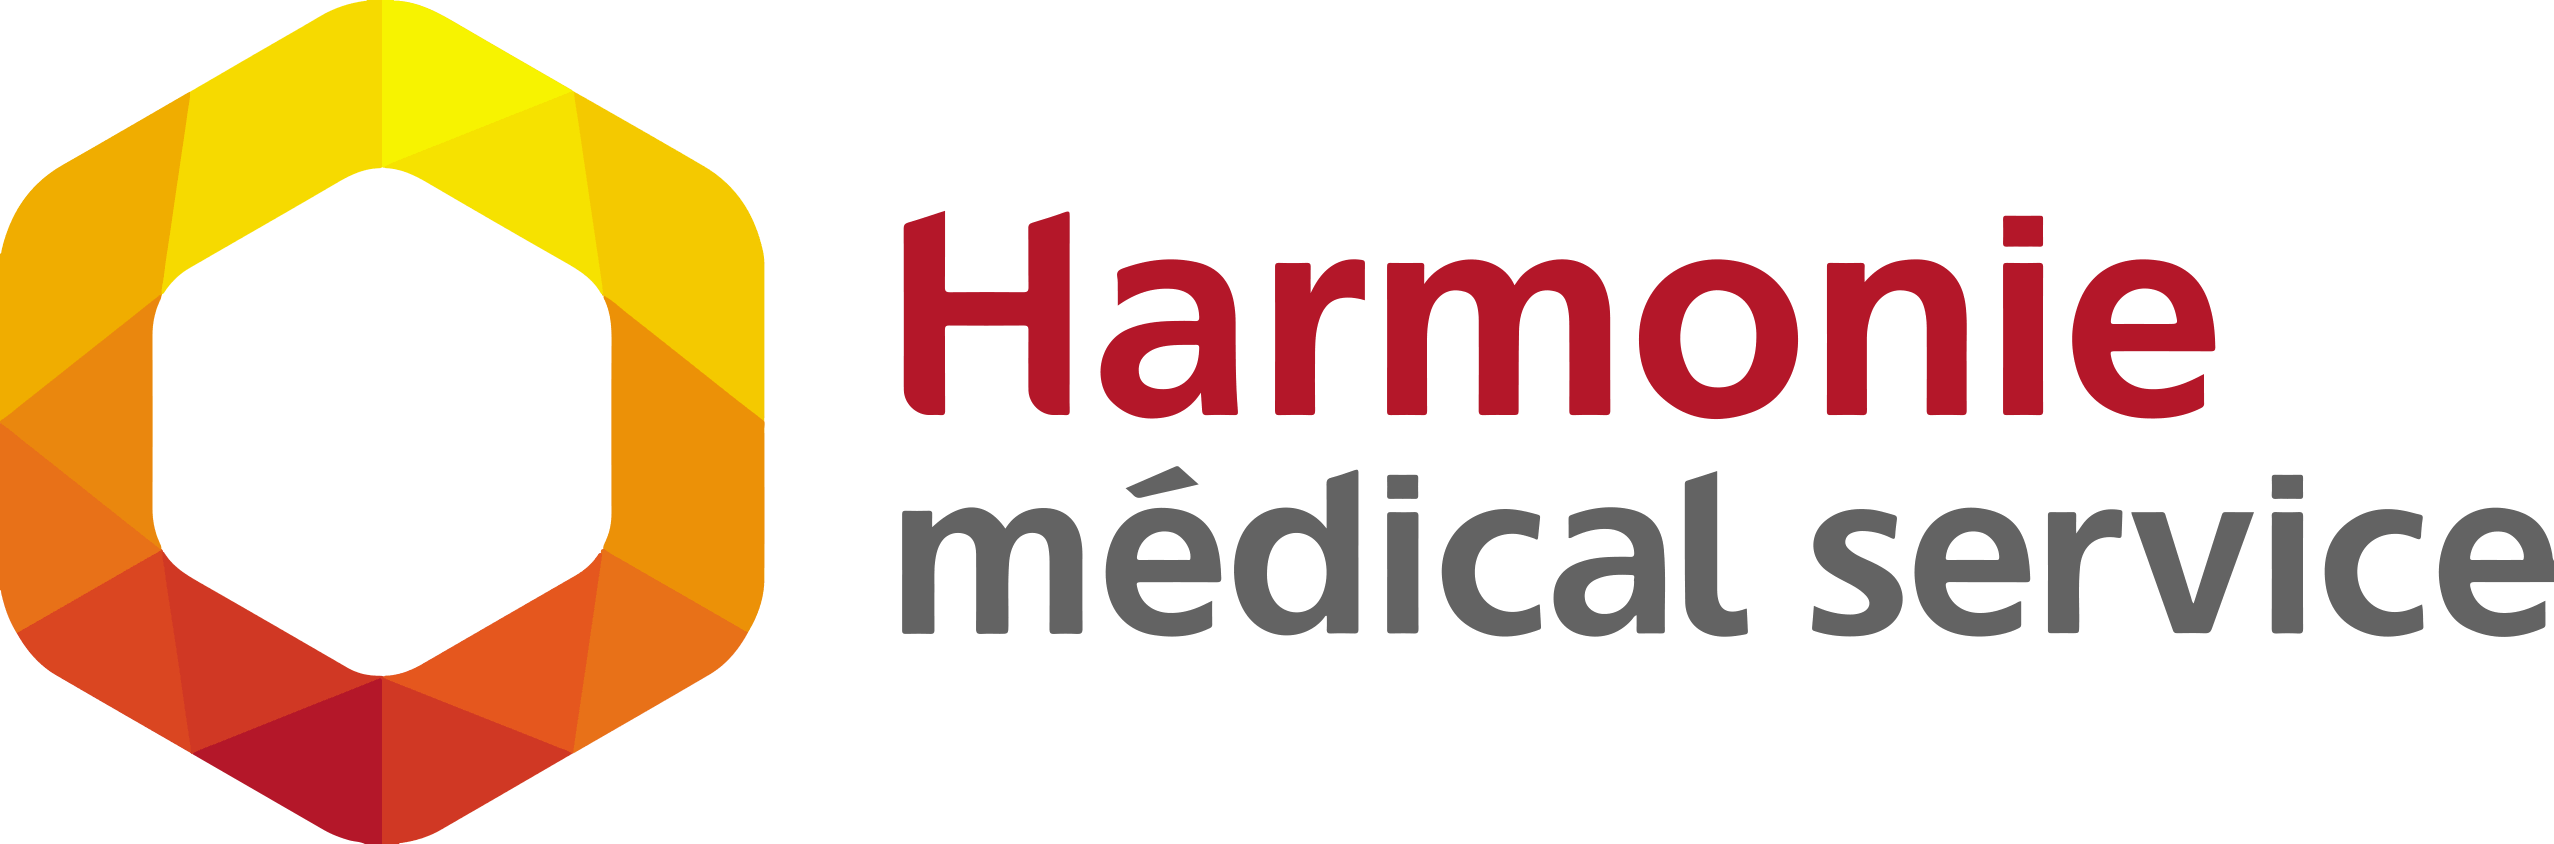 Harmonie Medical Service